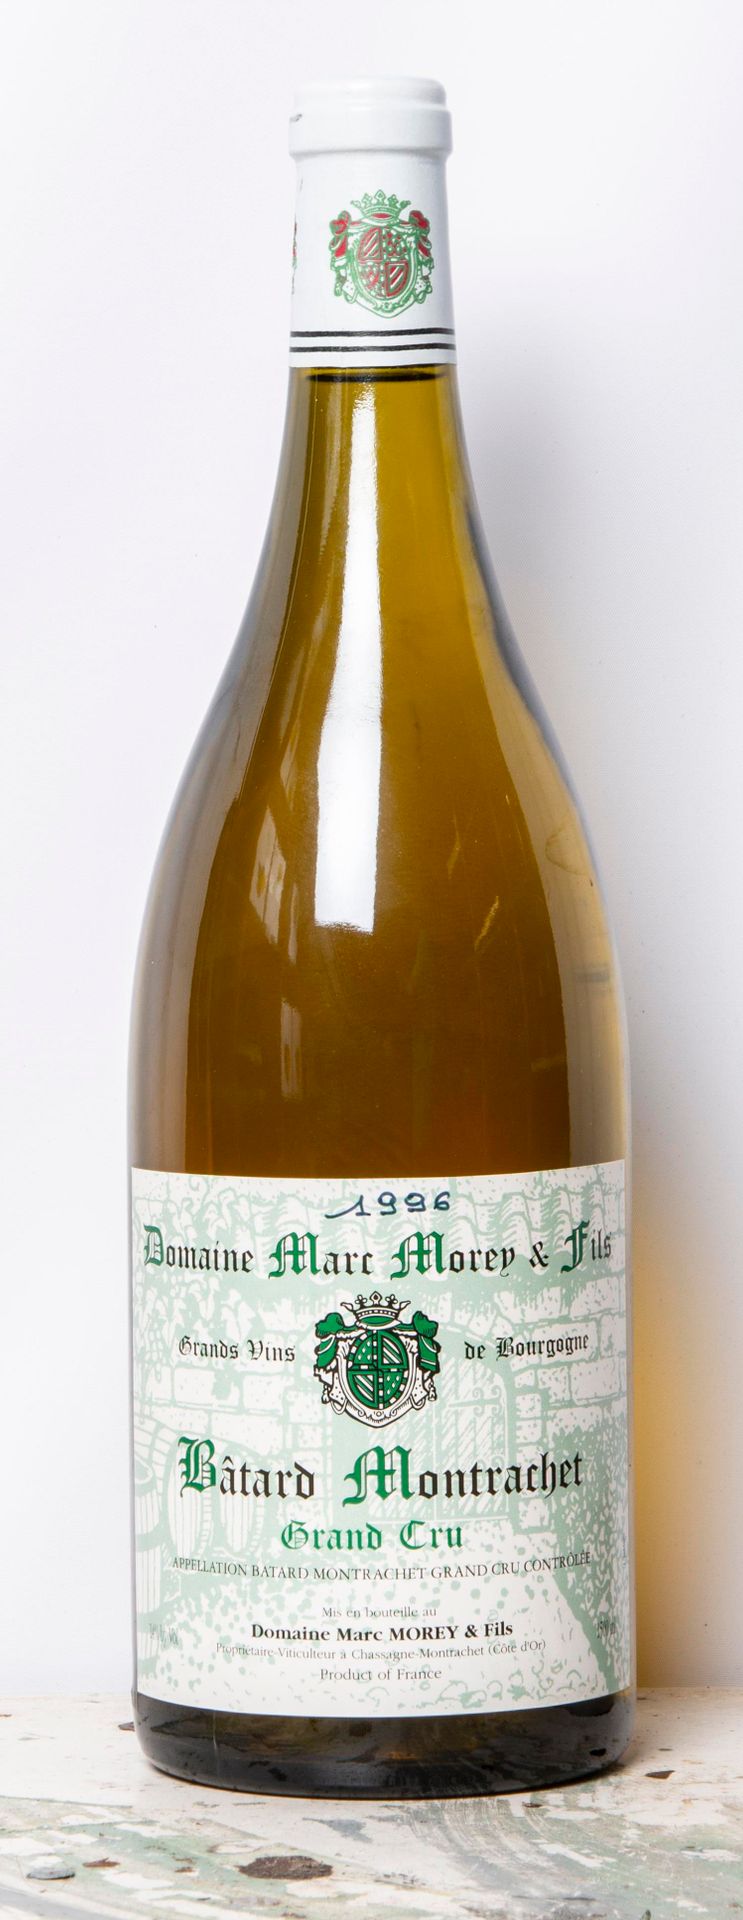 Null Domaine MARC MOREY Bâtard-Montrachet Grand Cru 1996, Burgund (F)
1 Magnumfl&hellip;